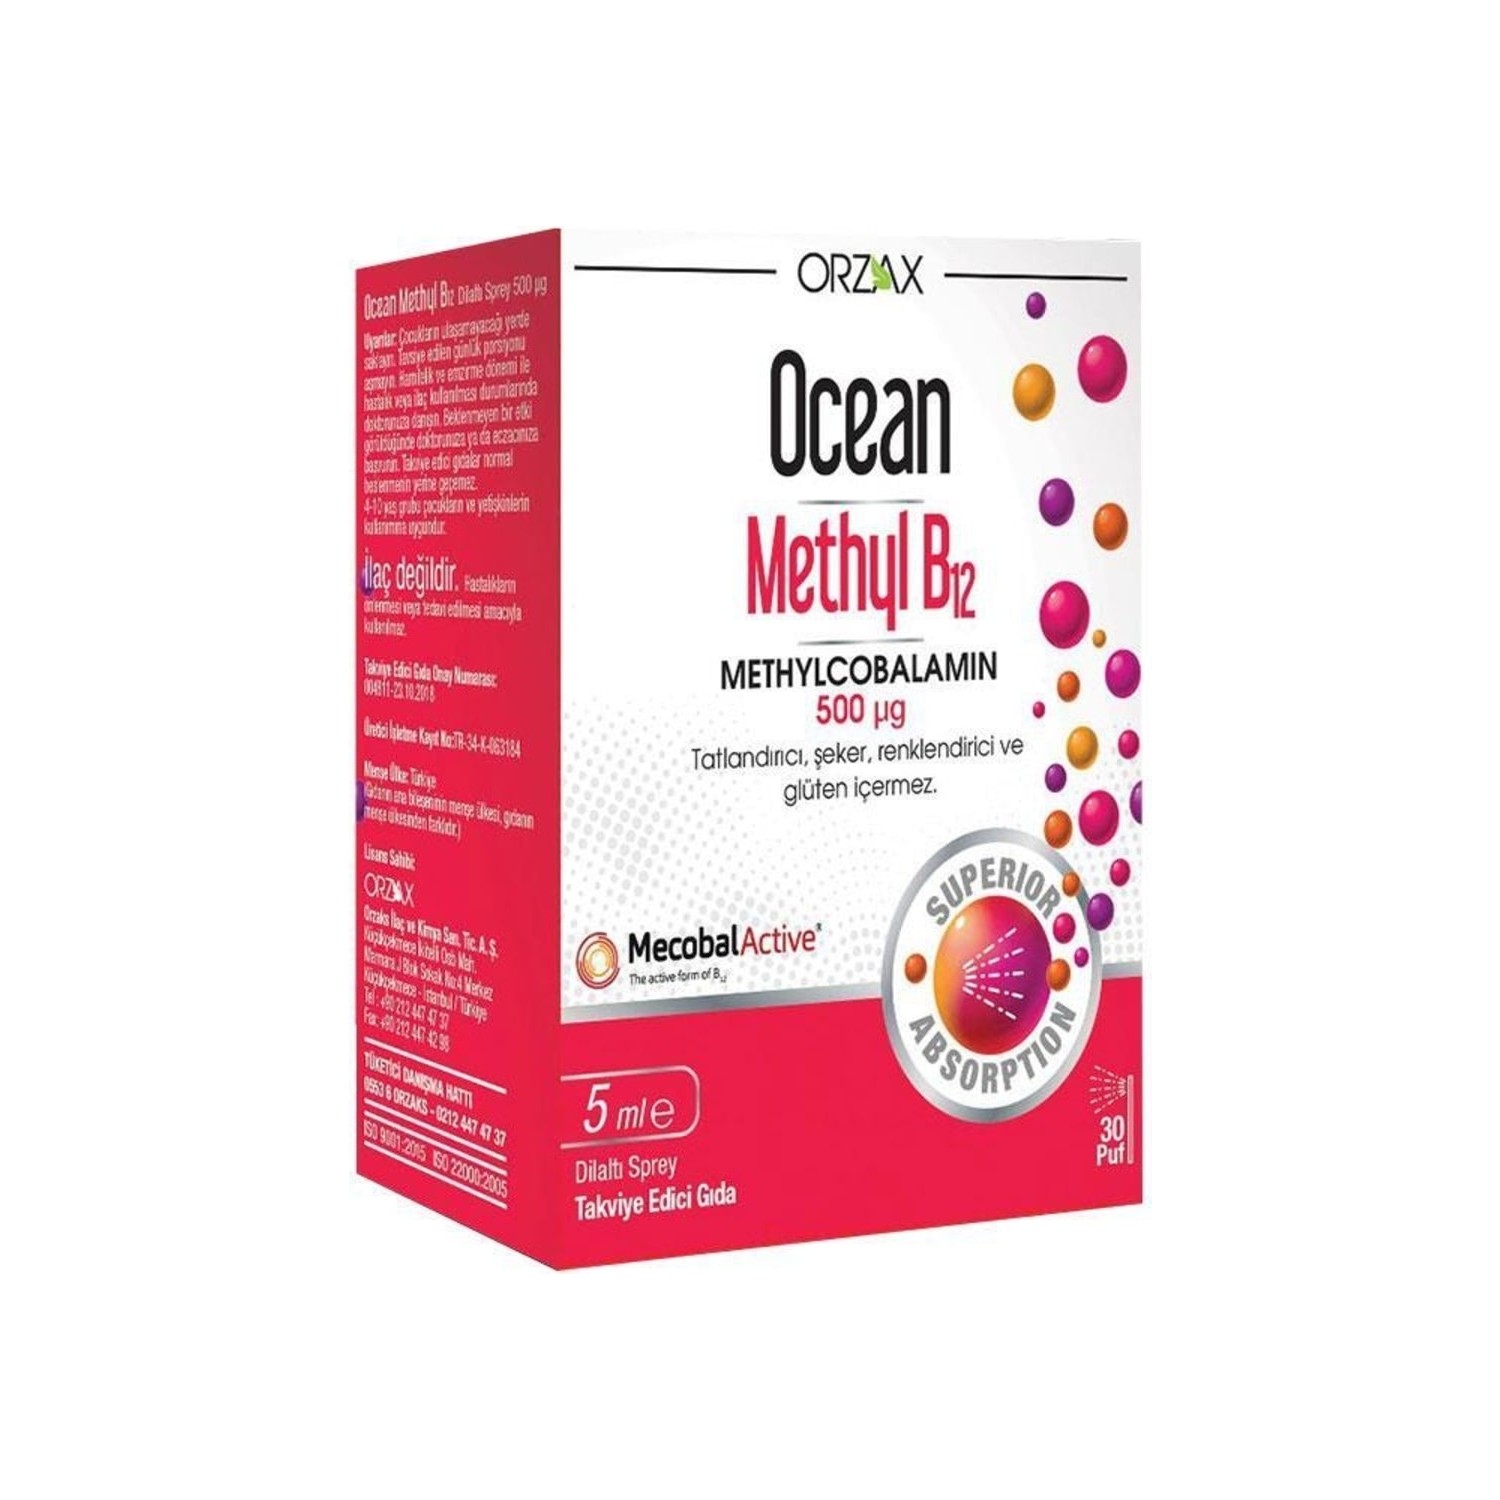 Спрей Ocean Orzax Methyl B12, 5 мл спрей orzax ocean methyl b12 500 мкг 5 мл